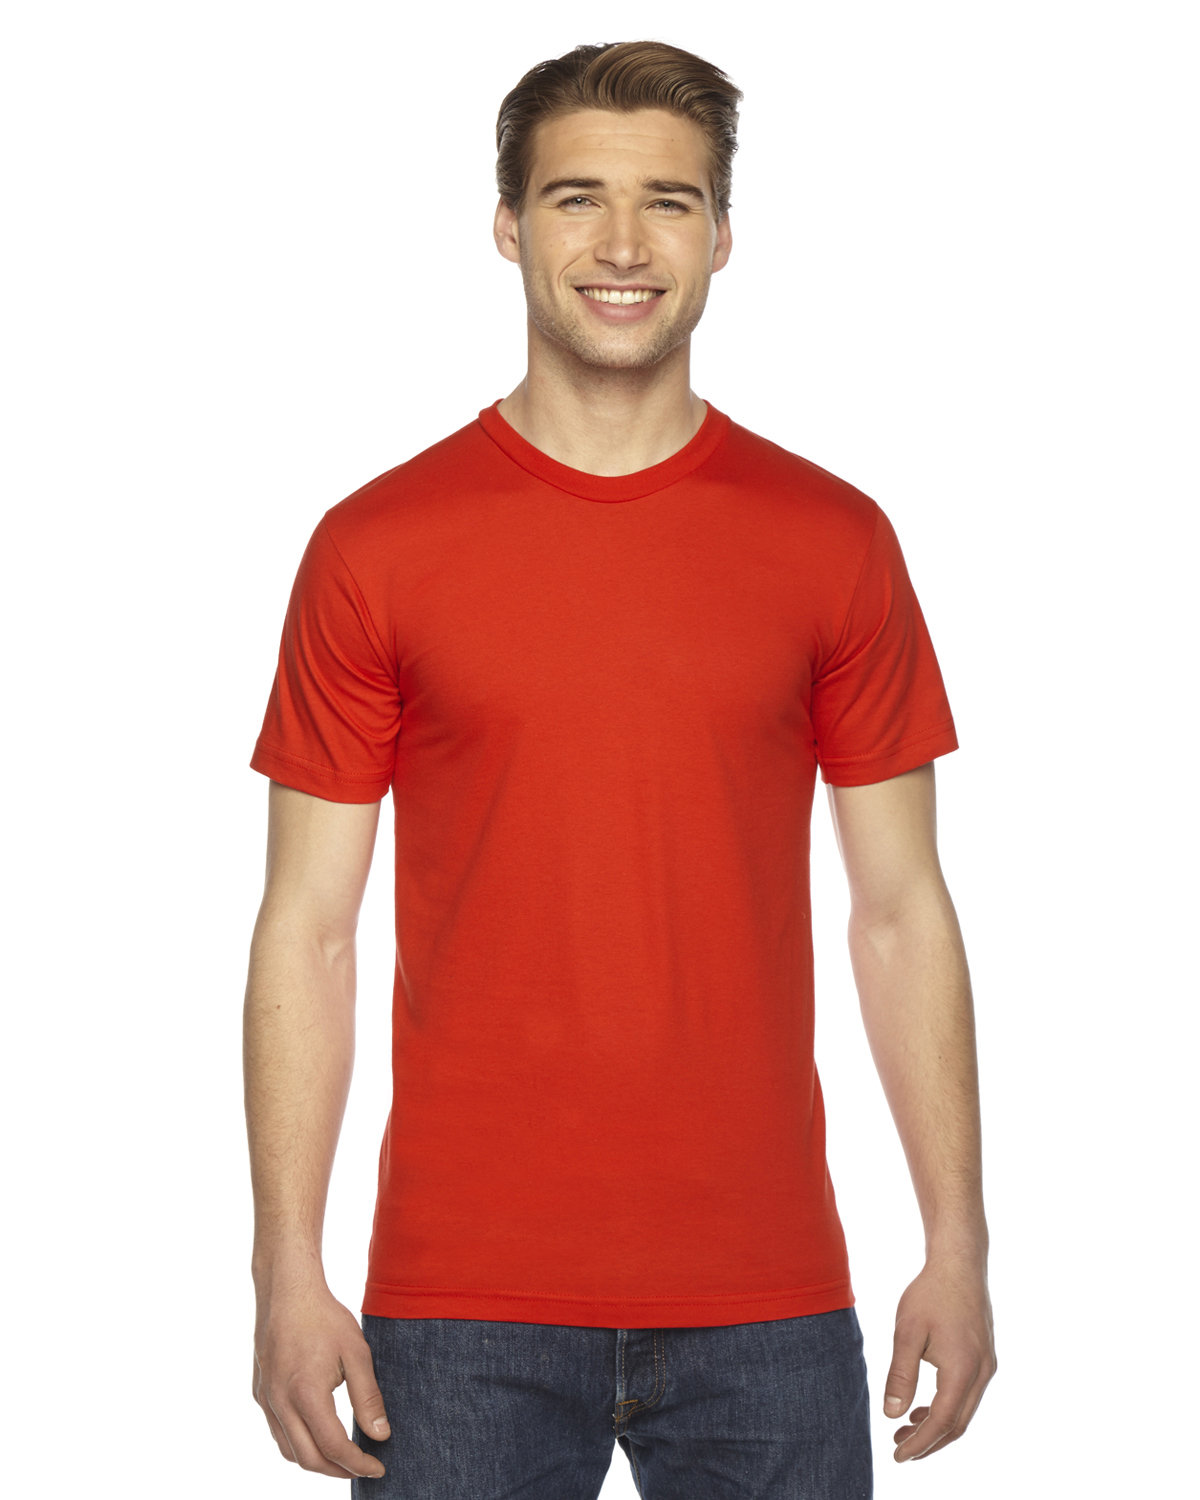 American Apparel Unisex Fine Jersey Short-Sleeve T-Shirt ORANGE 